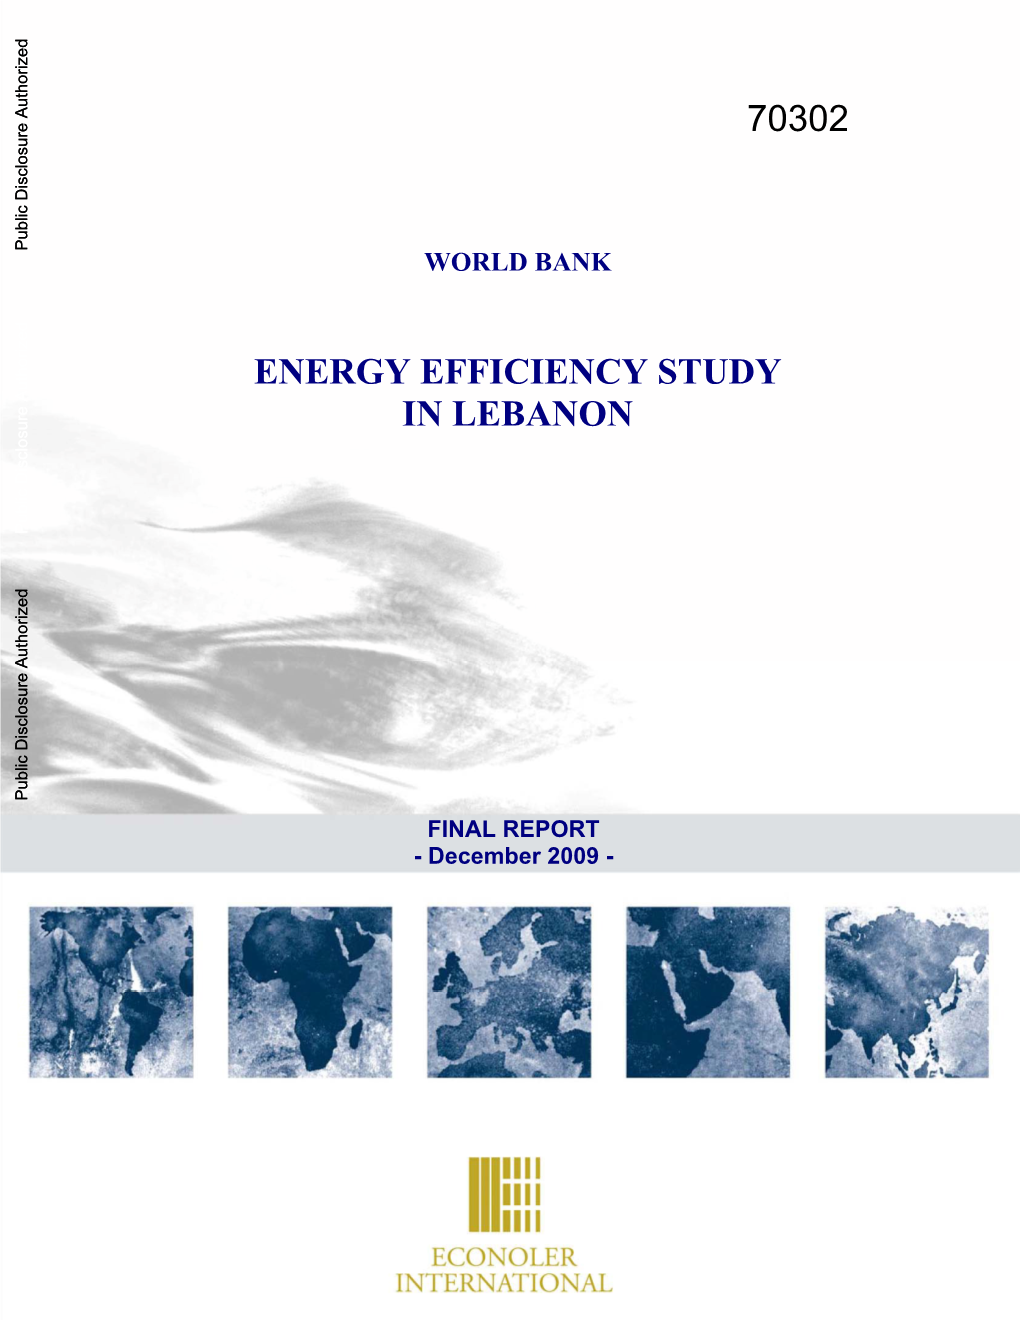 World Bank Energy Efficiency Study in Lebanon Final Report